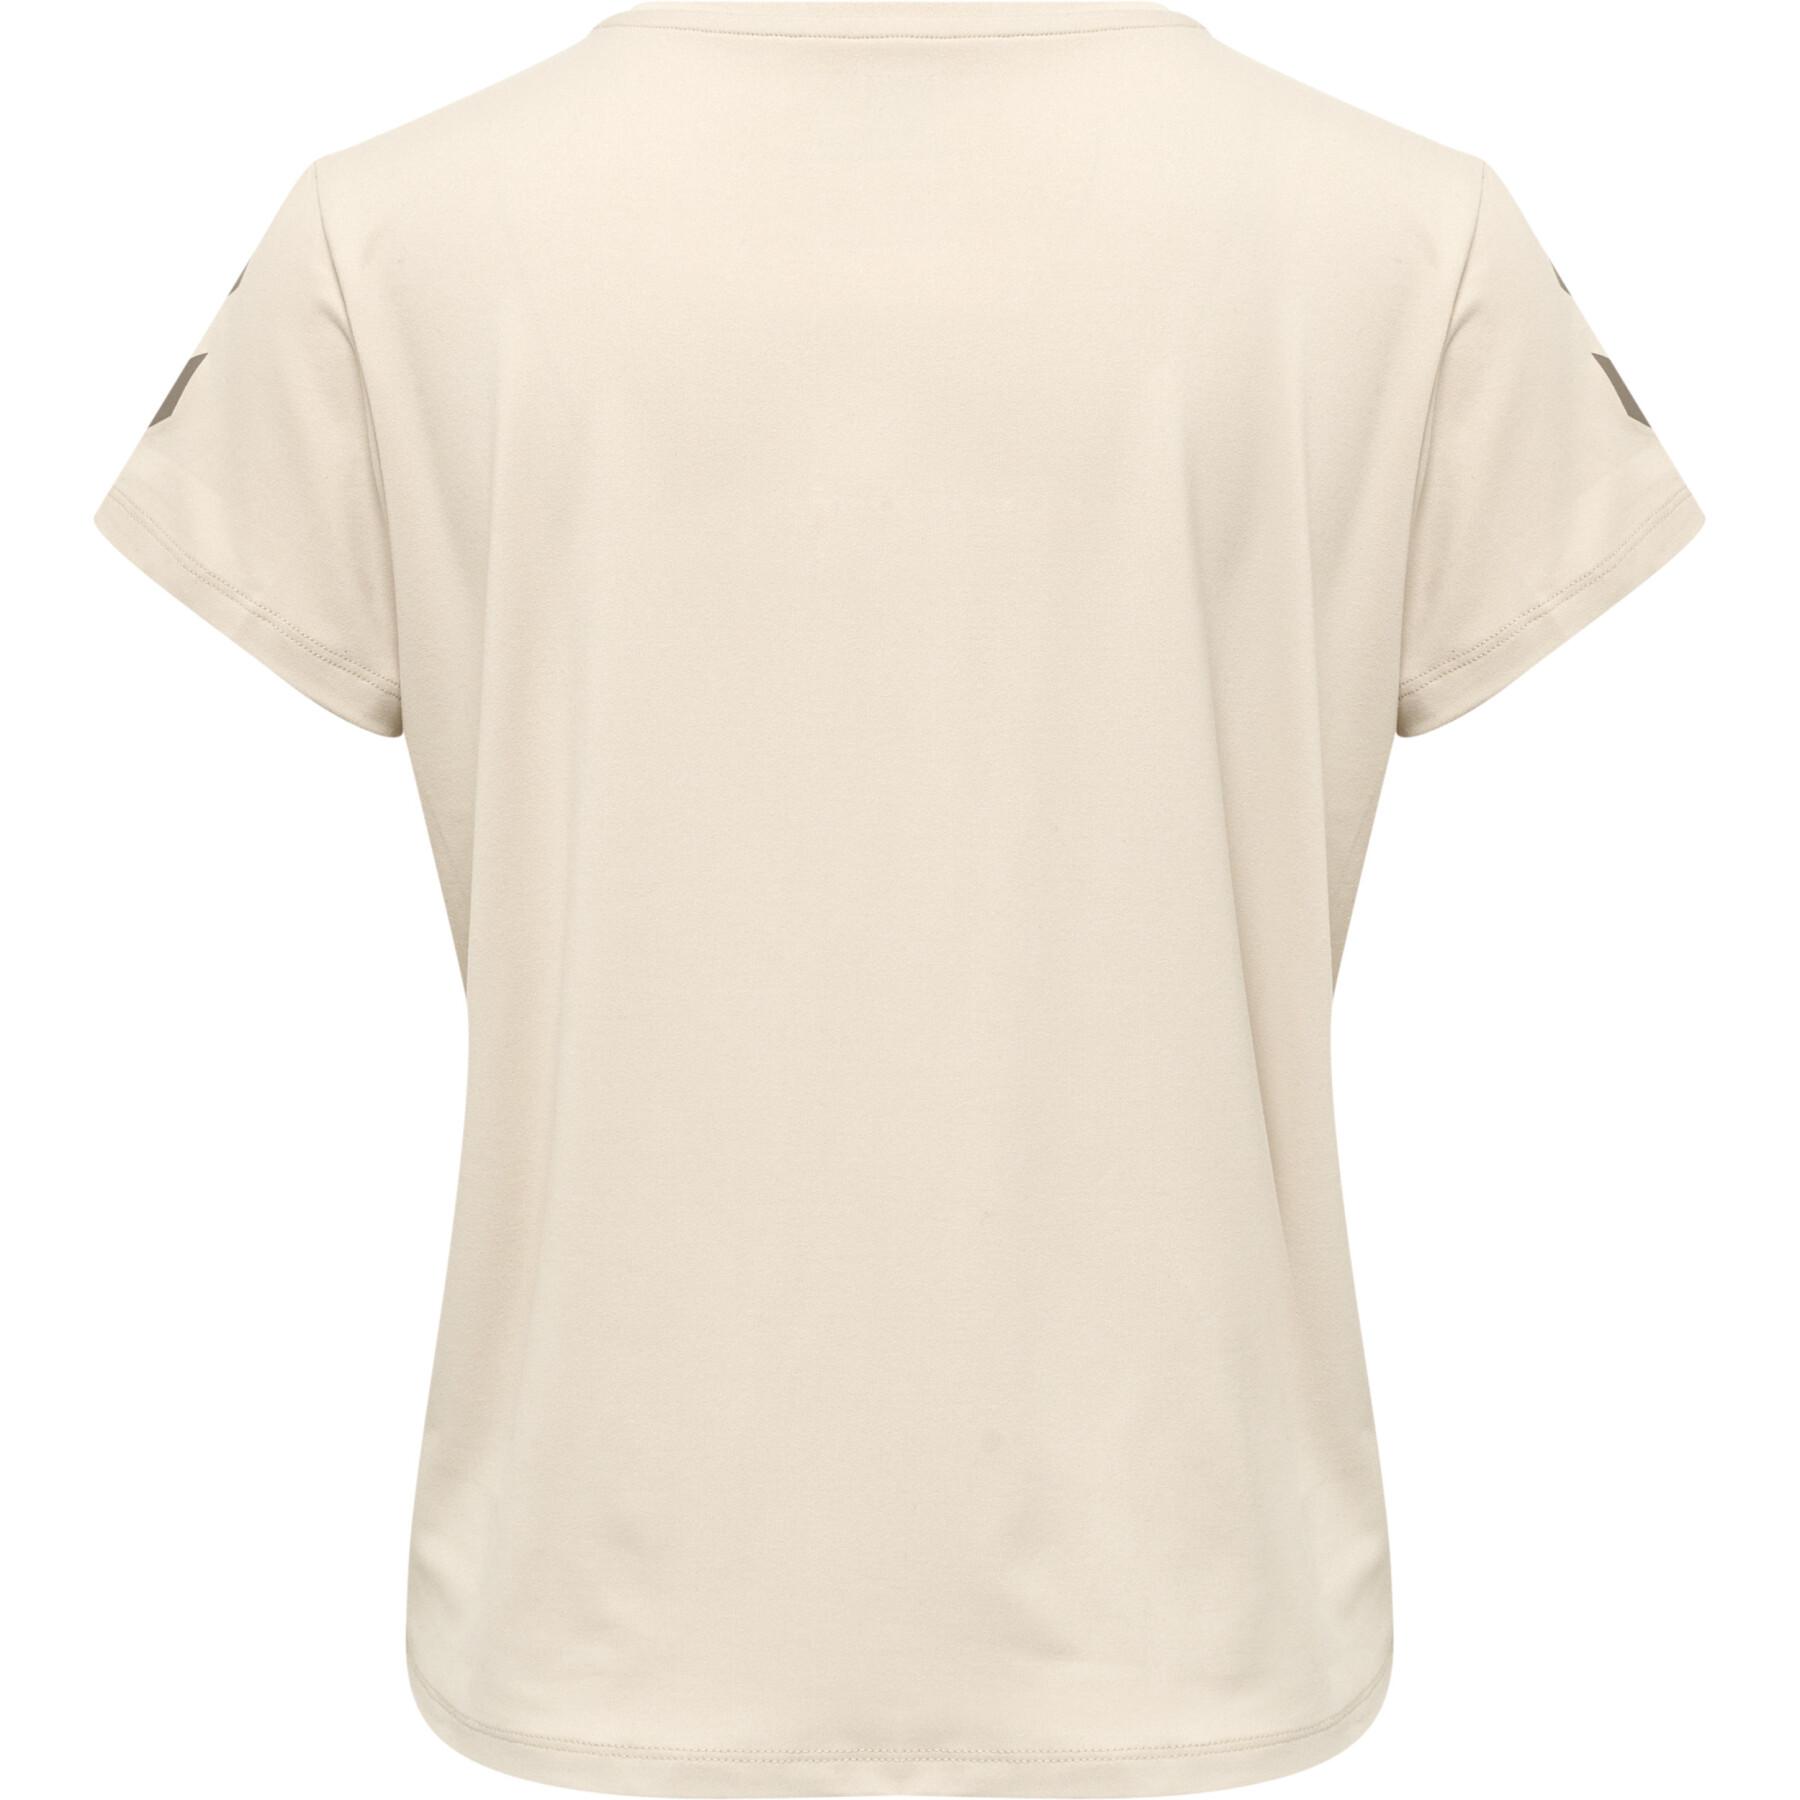 Women's T-shirt Hummel MT Taylor - Hummel - Sportswear T-Shirts - T-Shirts